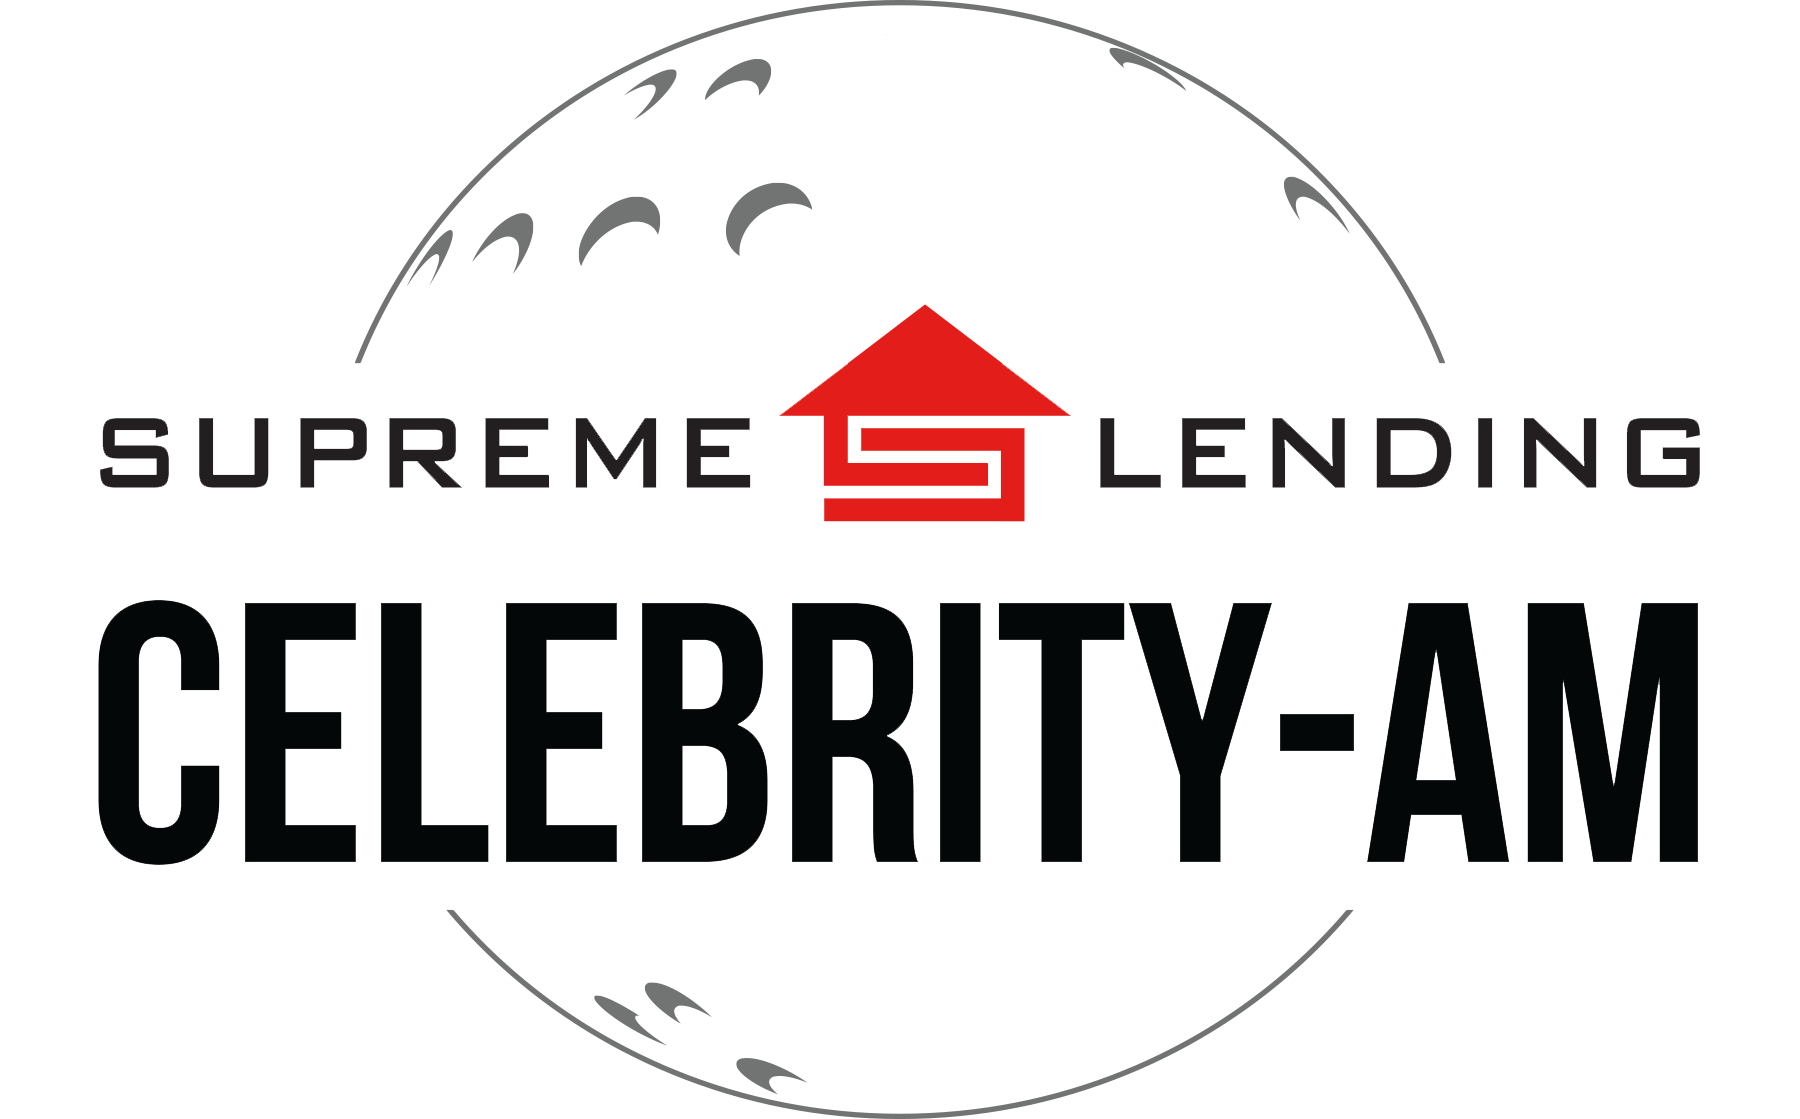 Supreme Lending Logo - Supreme Lending Celebrity Am | Benefiting the Momentous Institute